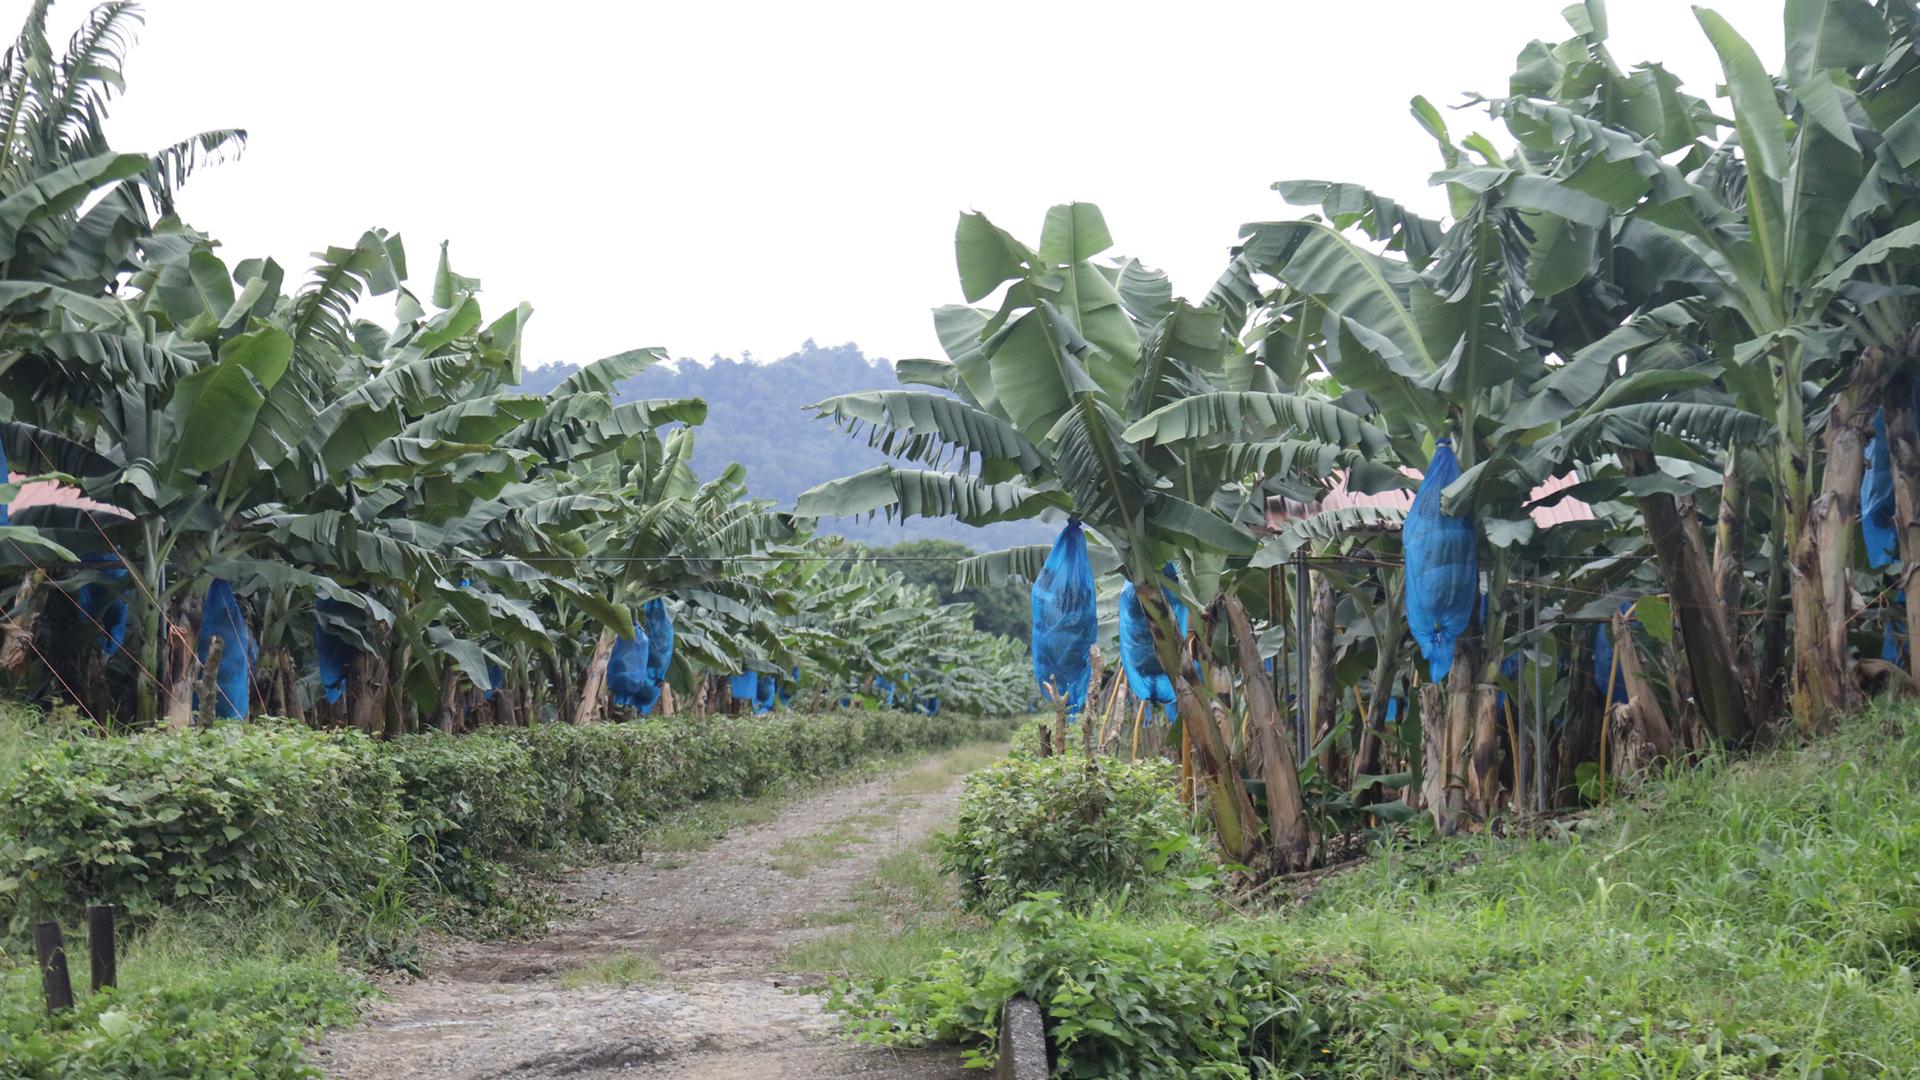 A banana farm on a plantation in Costa Rica, along the Caribbean coast, near the border with Panama.